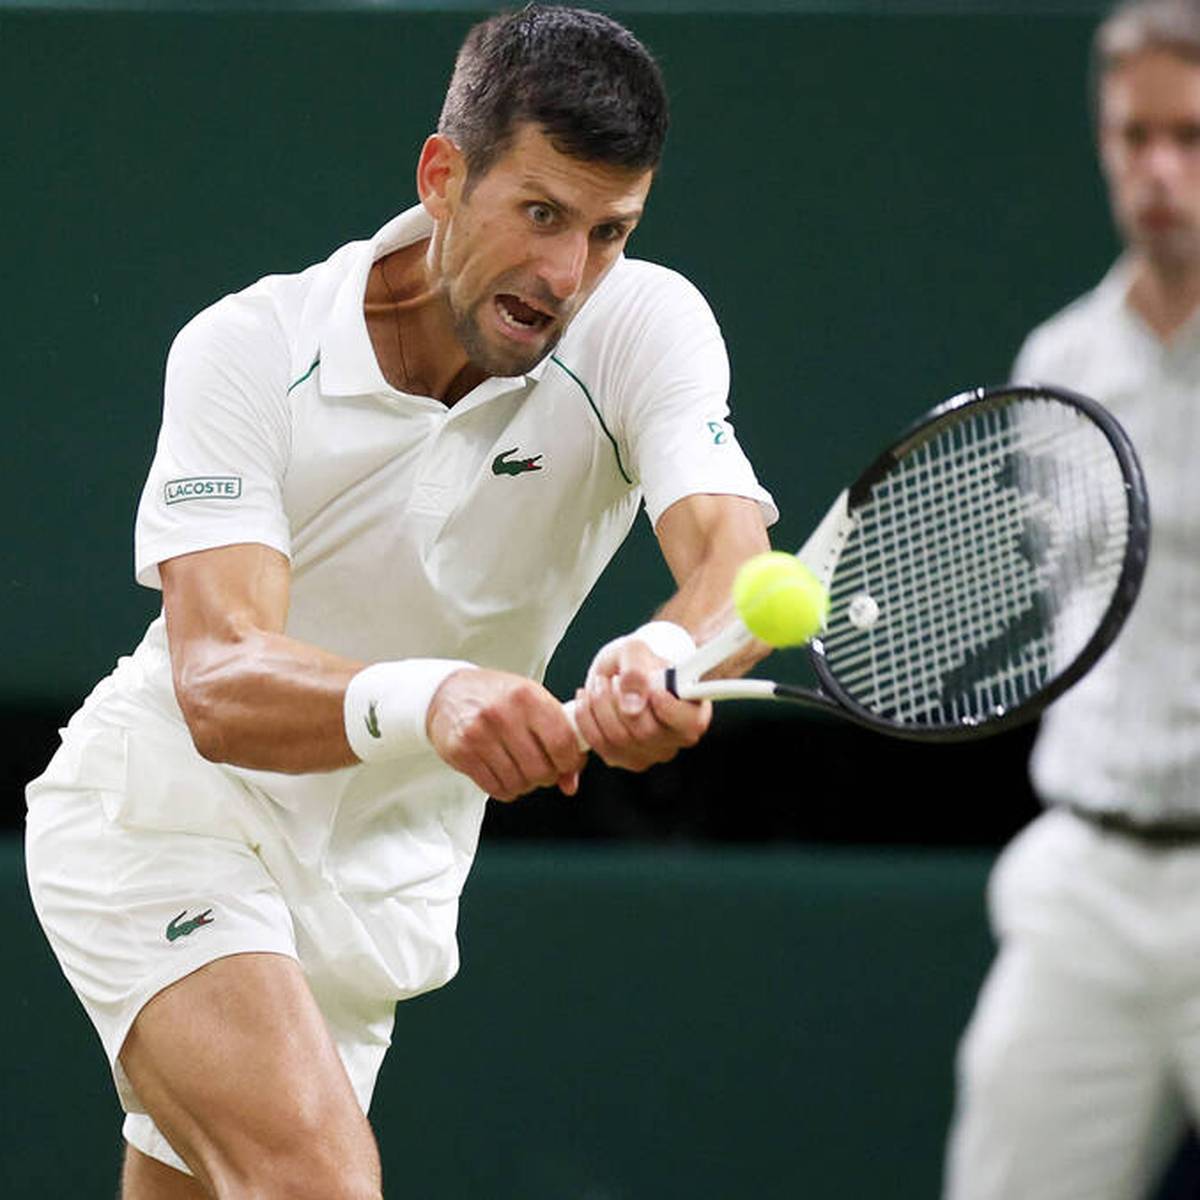 Wimbledon 2022 heute Djokovic will ins Halbfinale HEUTE LIVE im TV, Stream, Ticker